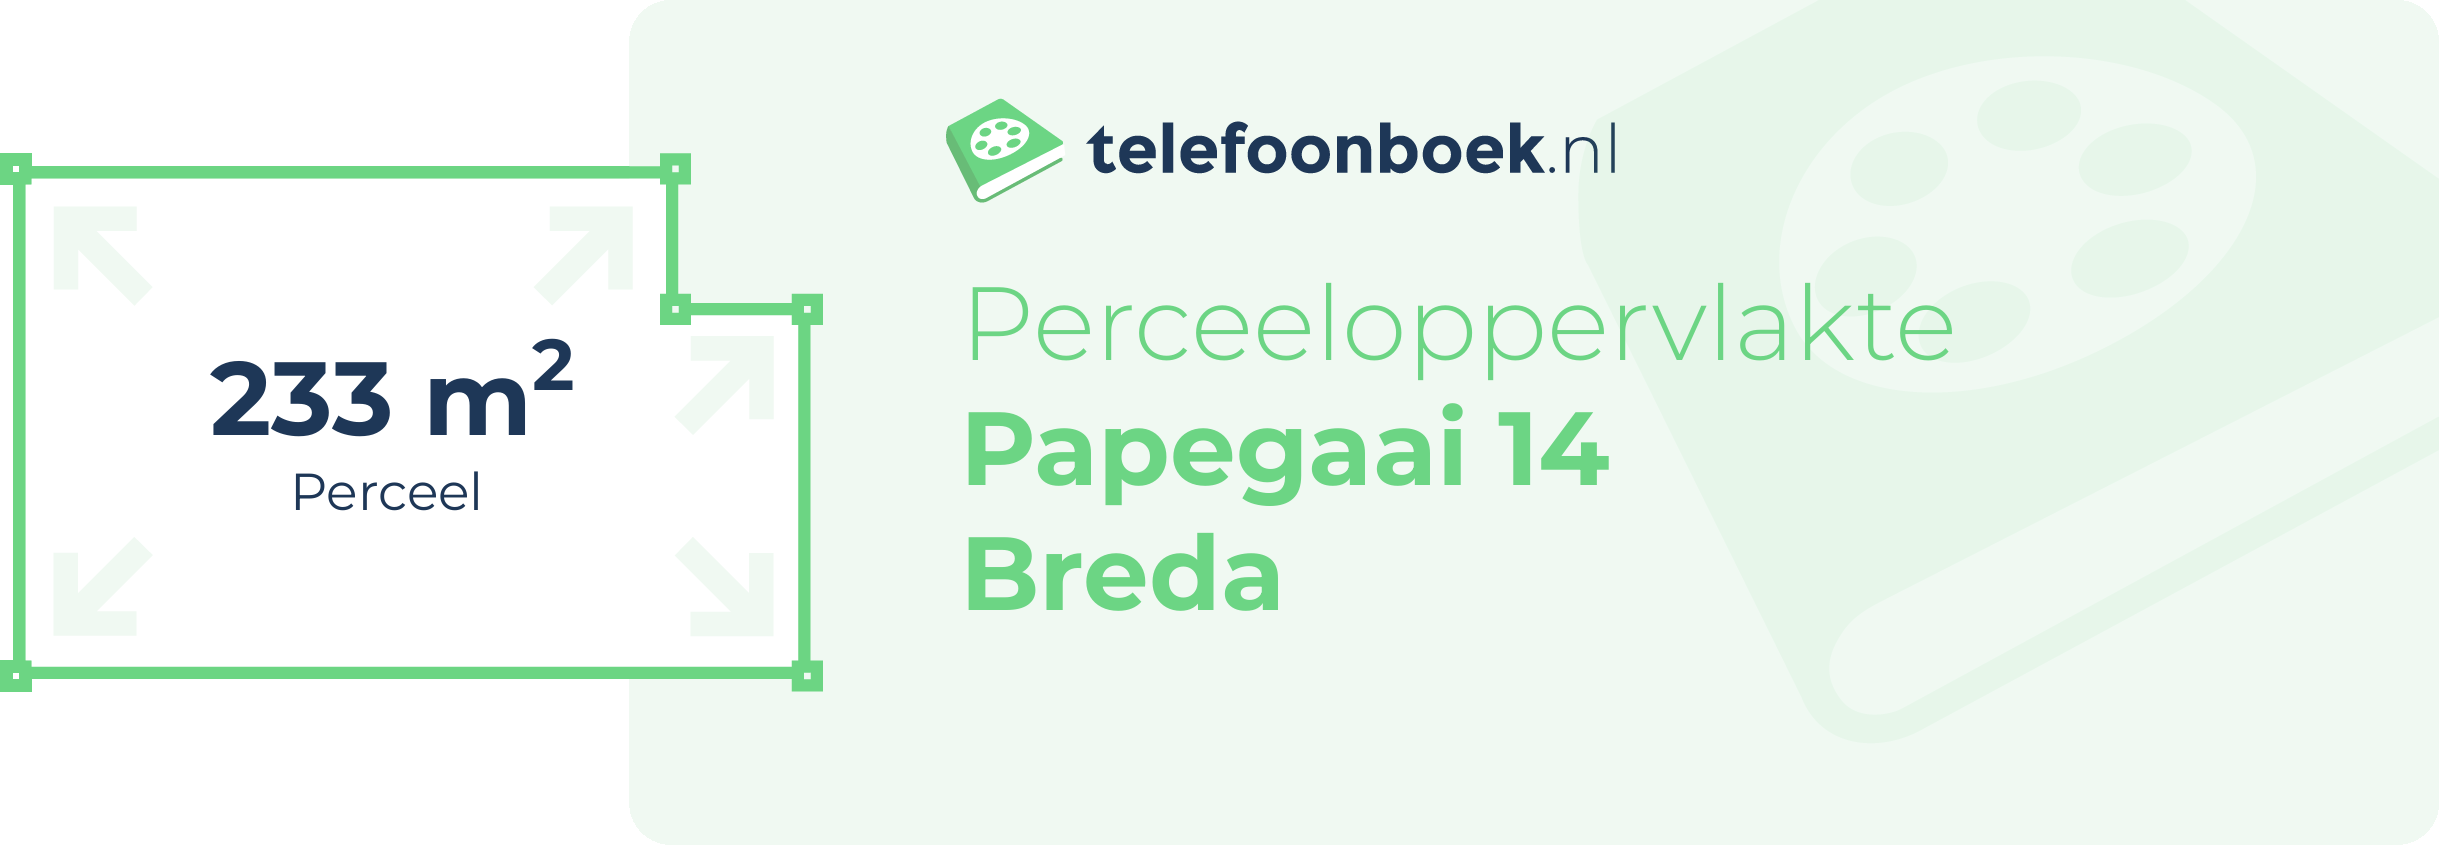 Perceeloppervlakte Papegaai 14 Breda